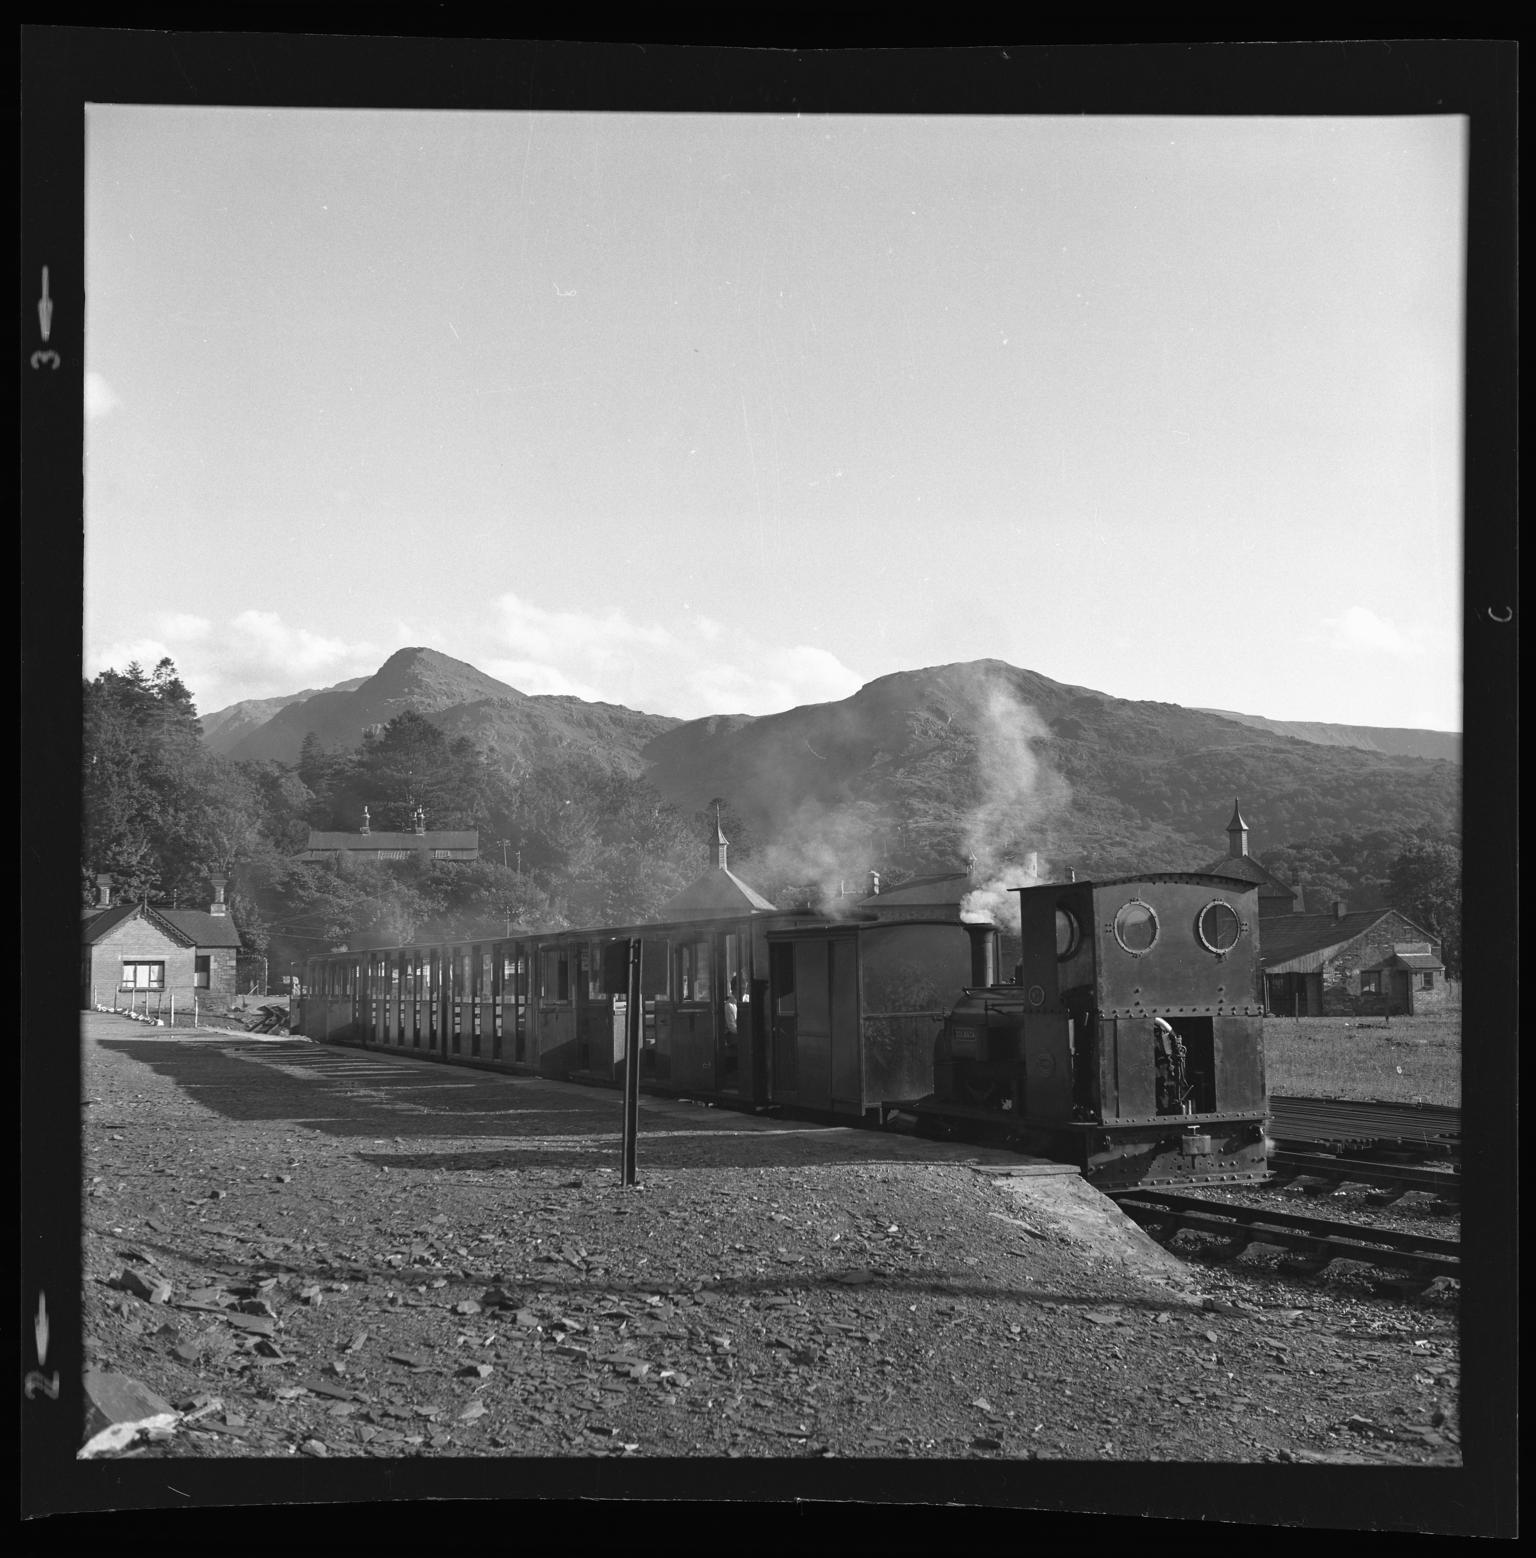 Llanberis Lake railway terminus, film negative